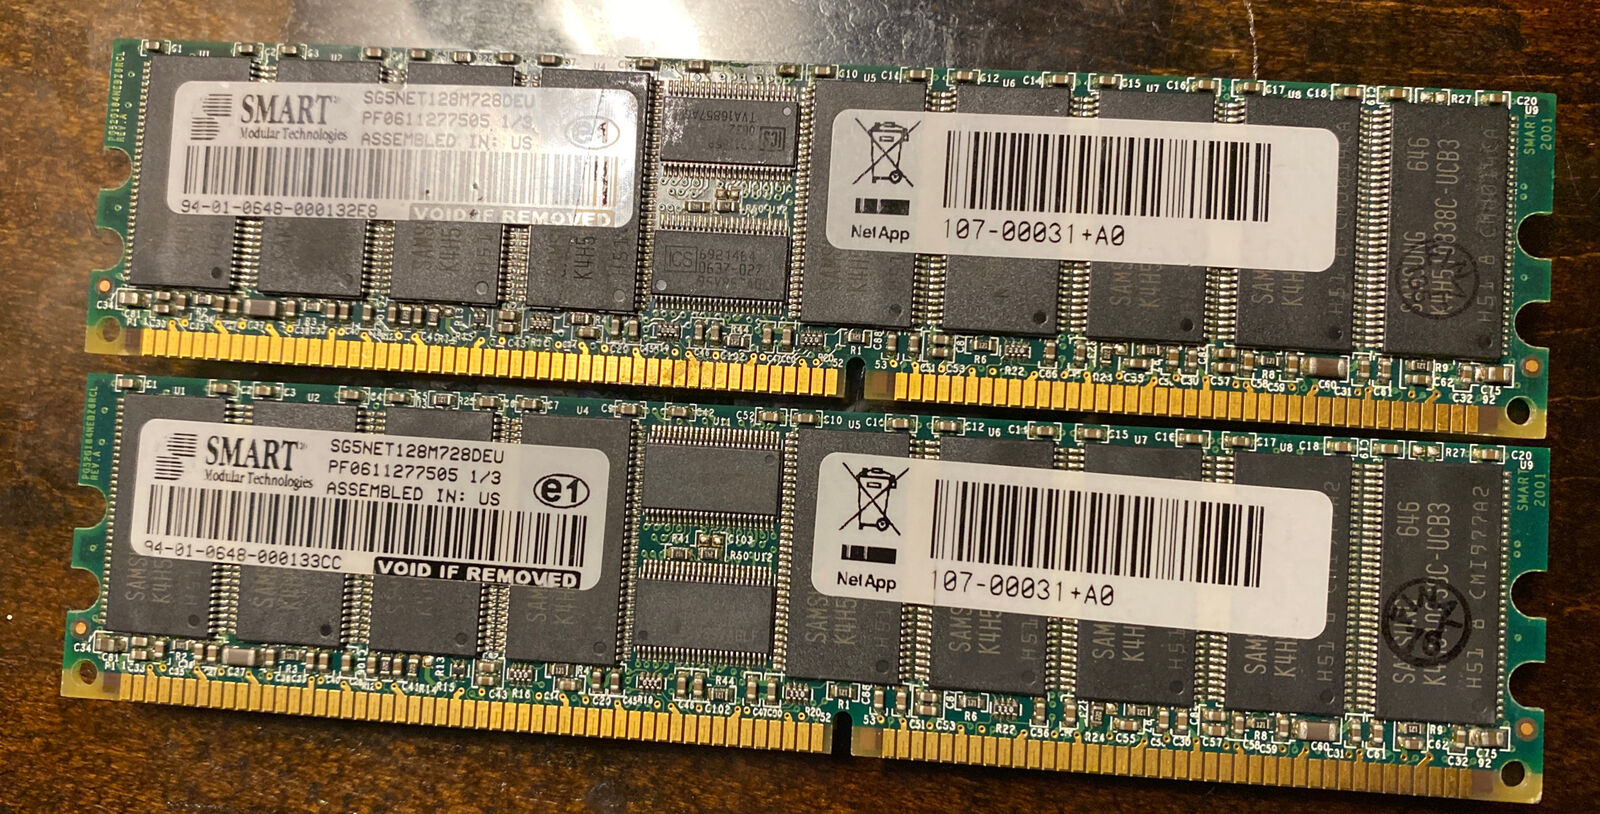 2GB Smart Modular (1GBx2) DDR Registered ECC PC-2700 333Mhz  SG5NET128M728DE